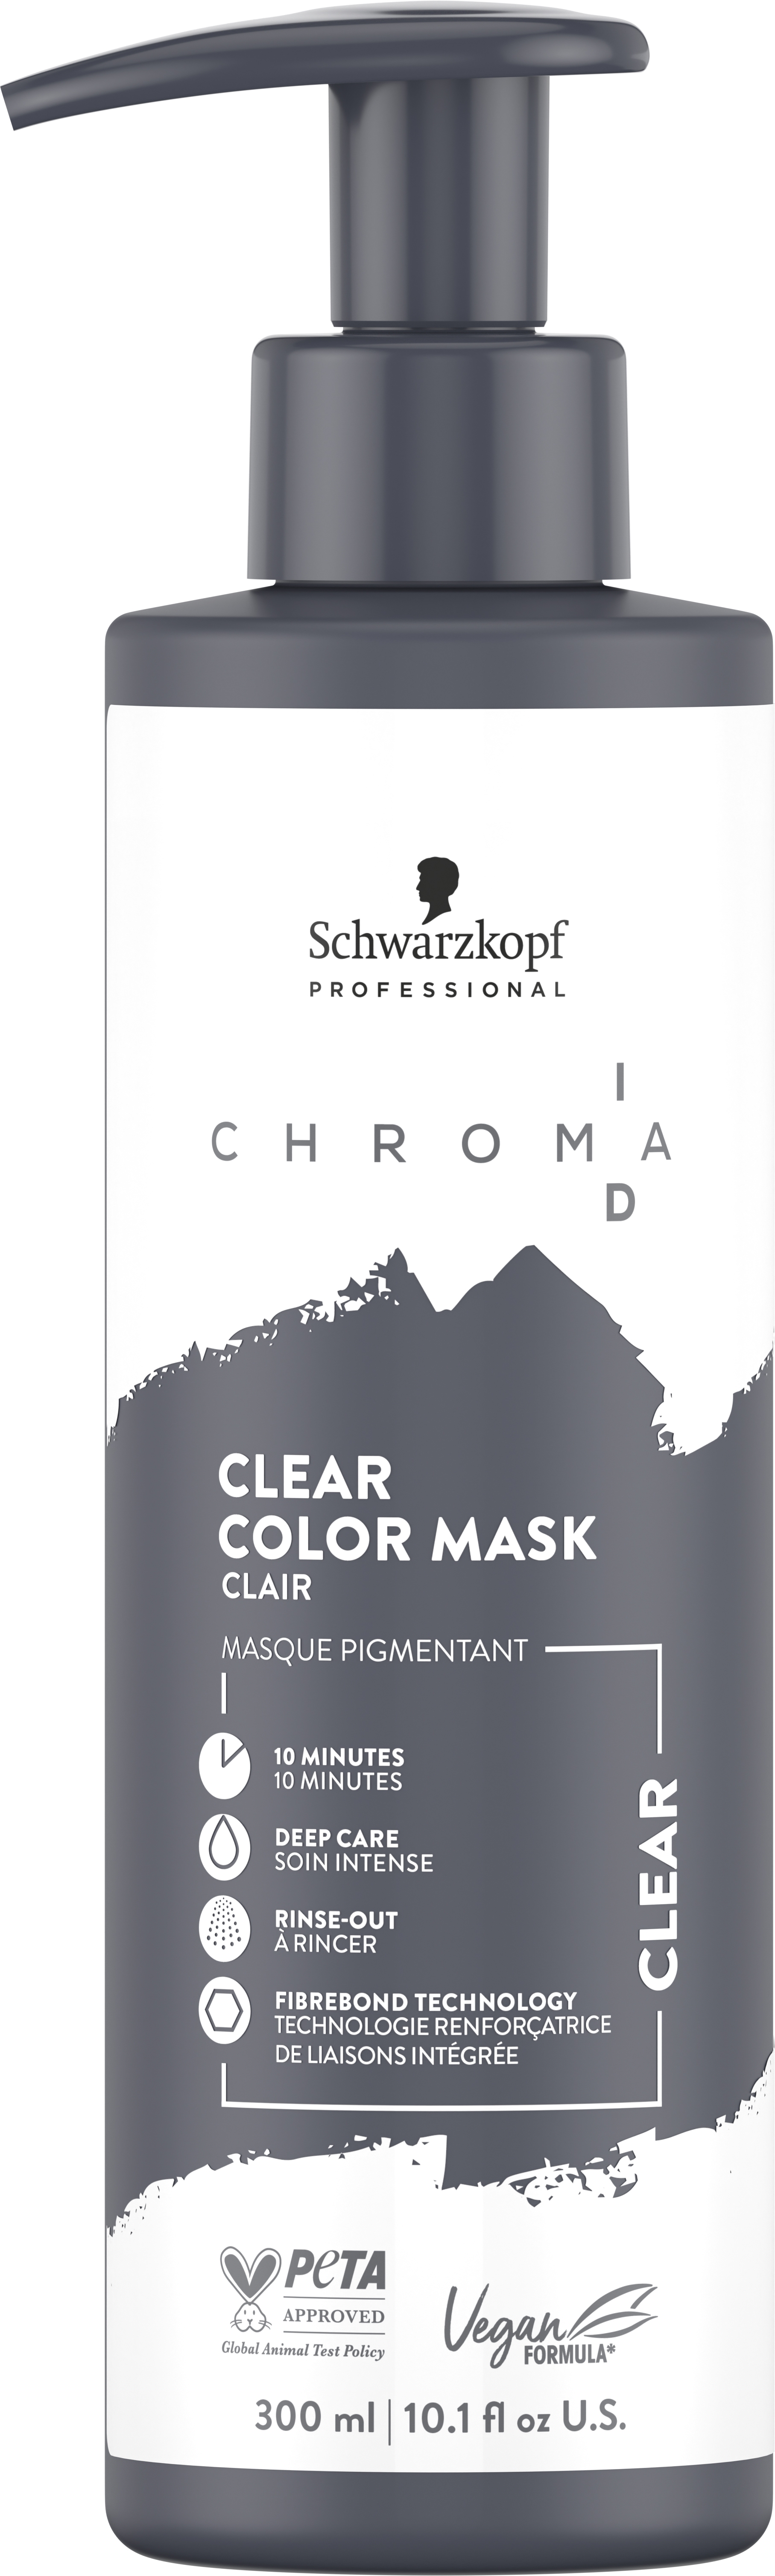 Produktbild von Chroma ID - Bonding Color Mask Clear